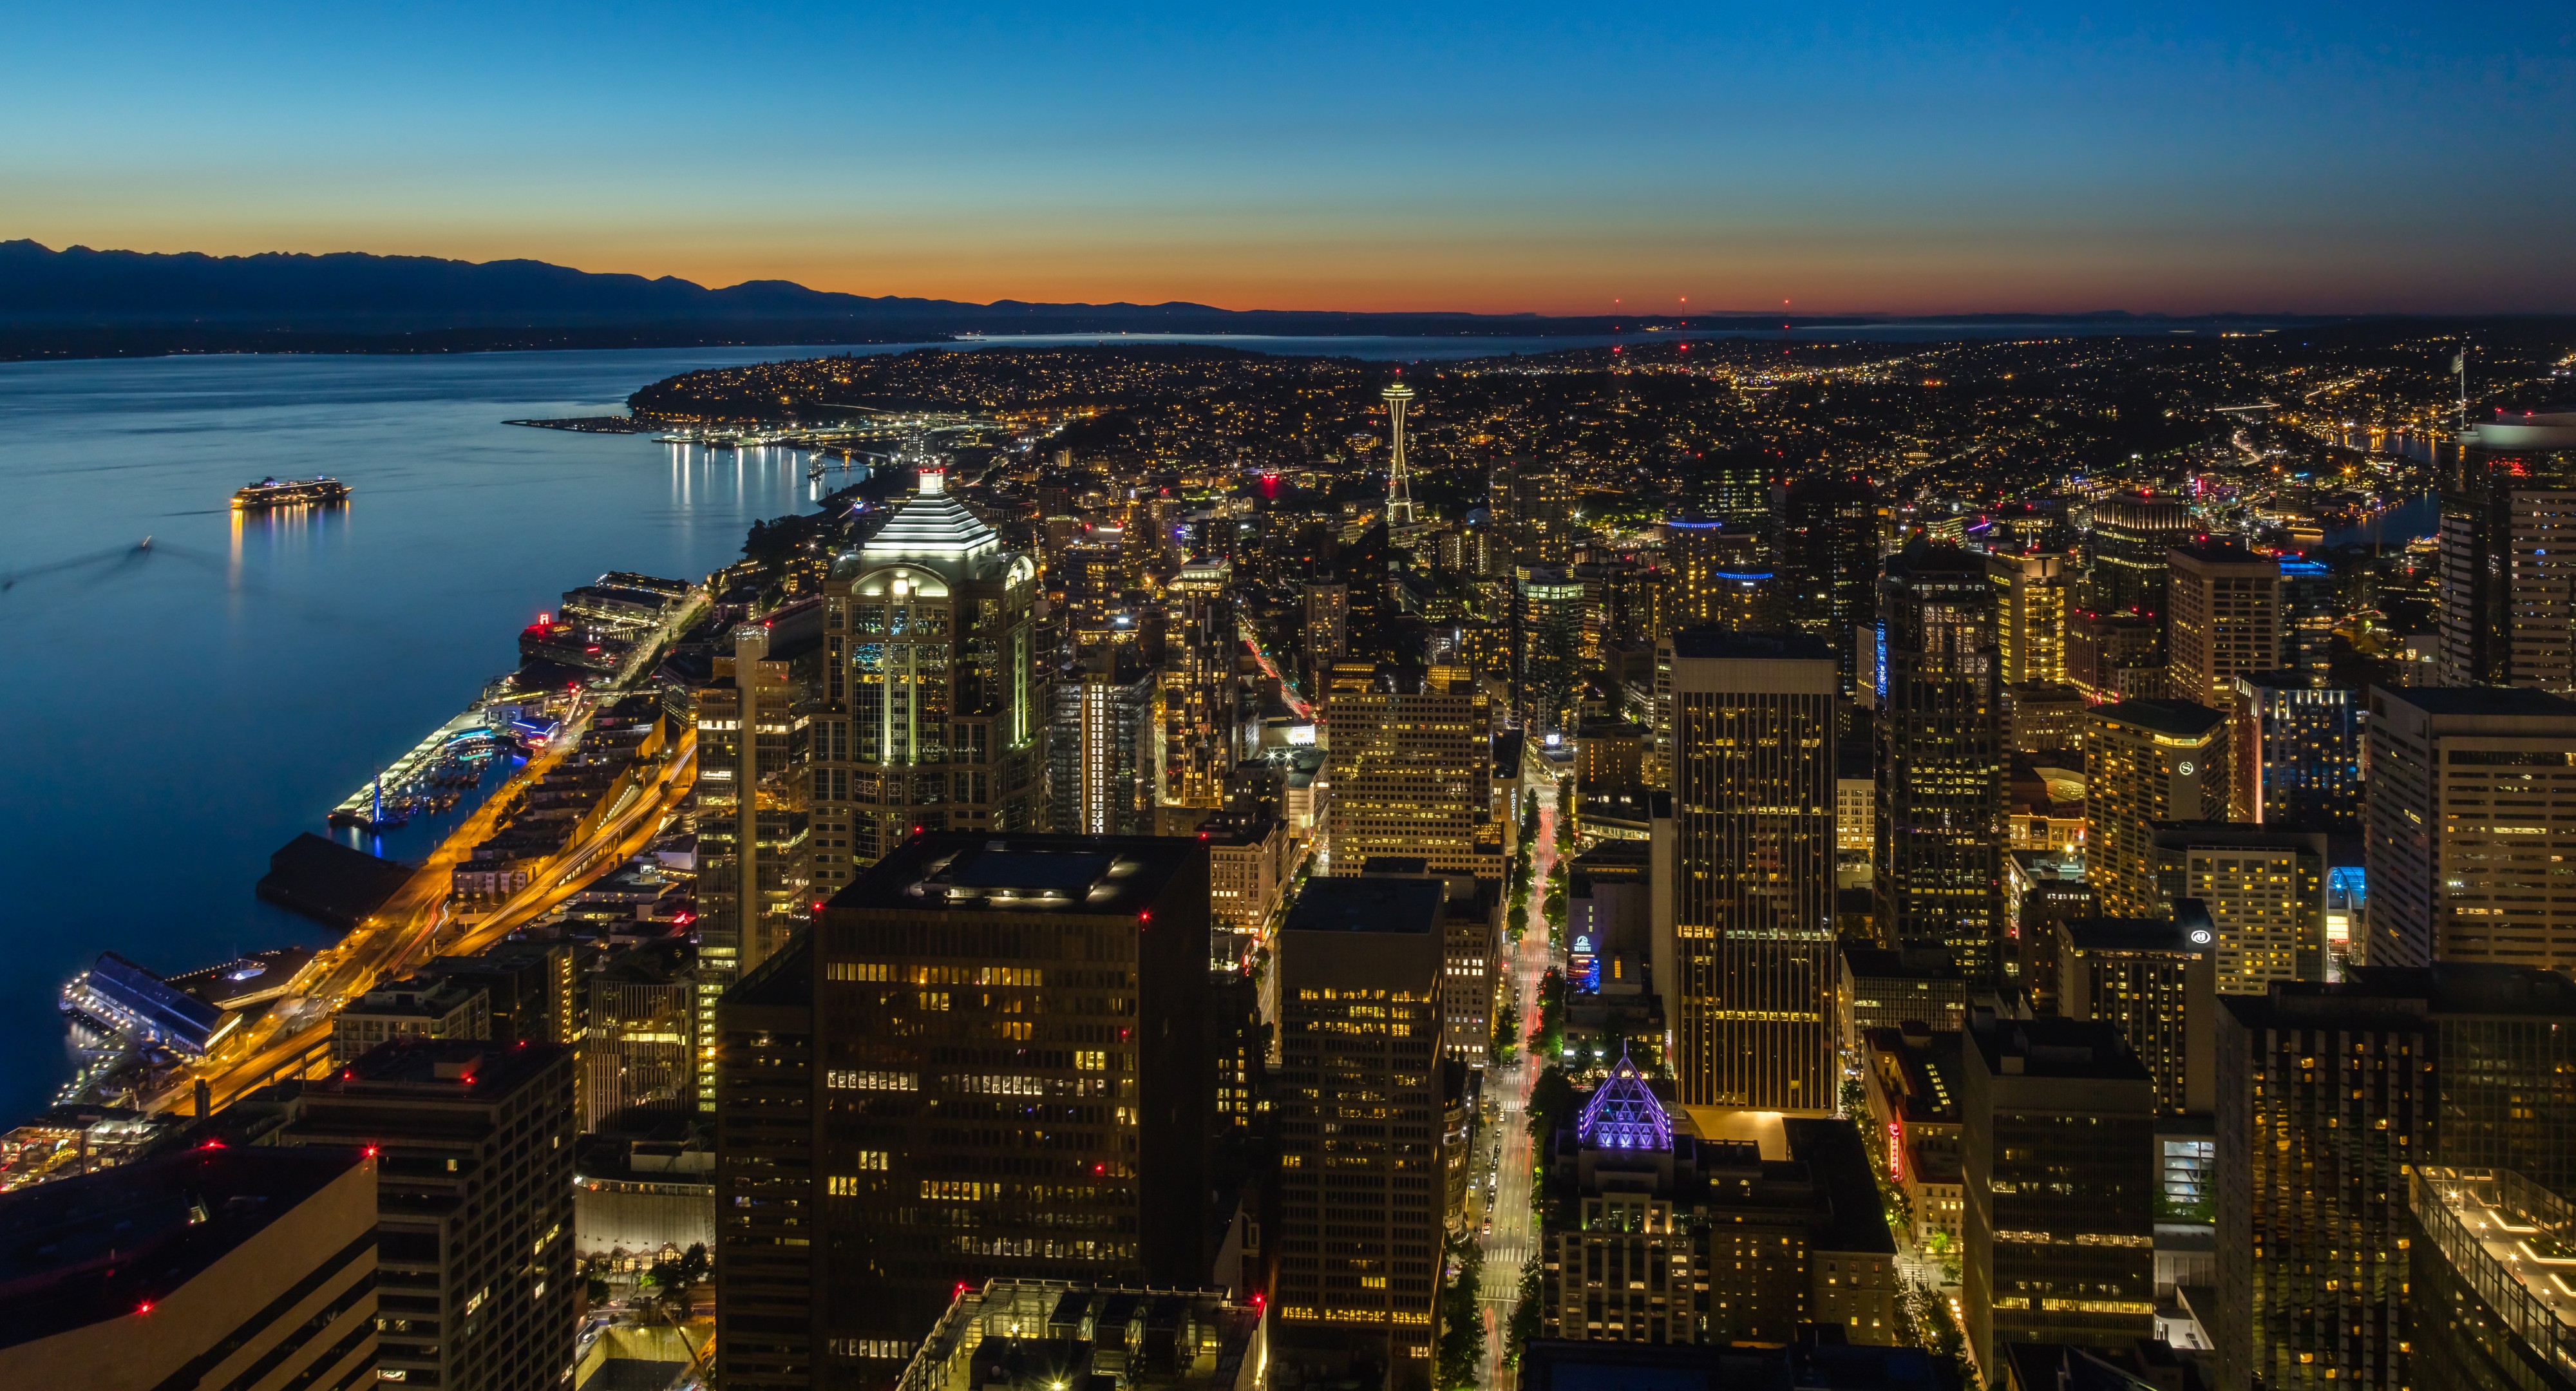 Vista de Seattle, Washington, Estados Unidos, 2017-09-02, DD 07-08 HDR